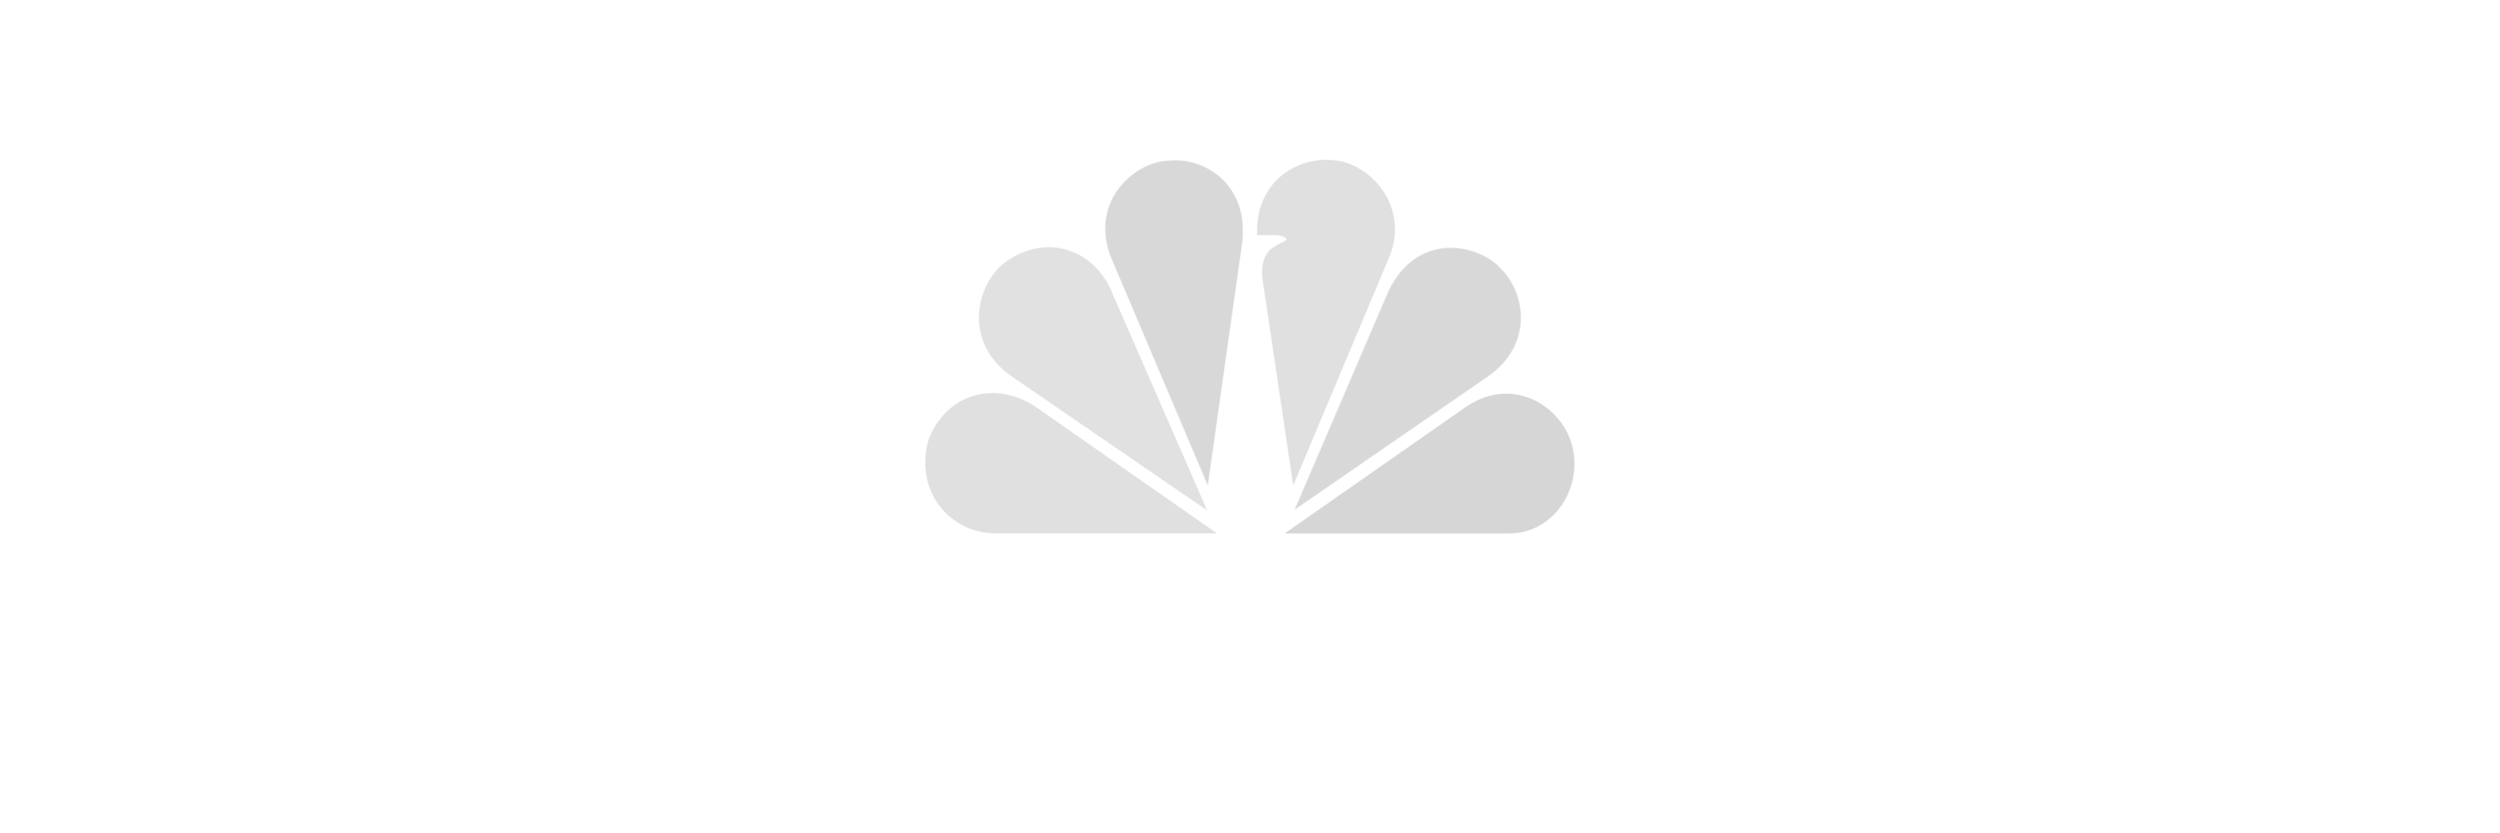 Cnbc com. Канал CNBC. CNBC logo. Лого телеканала NBC. CNBC Prime.